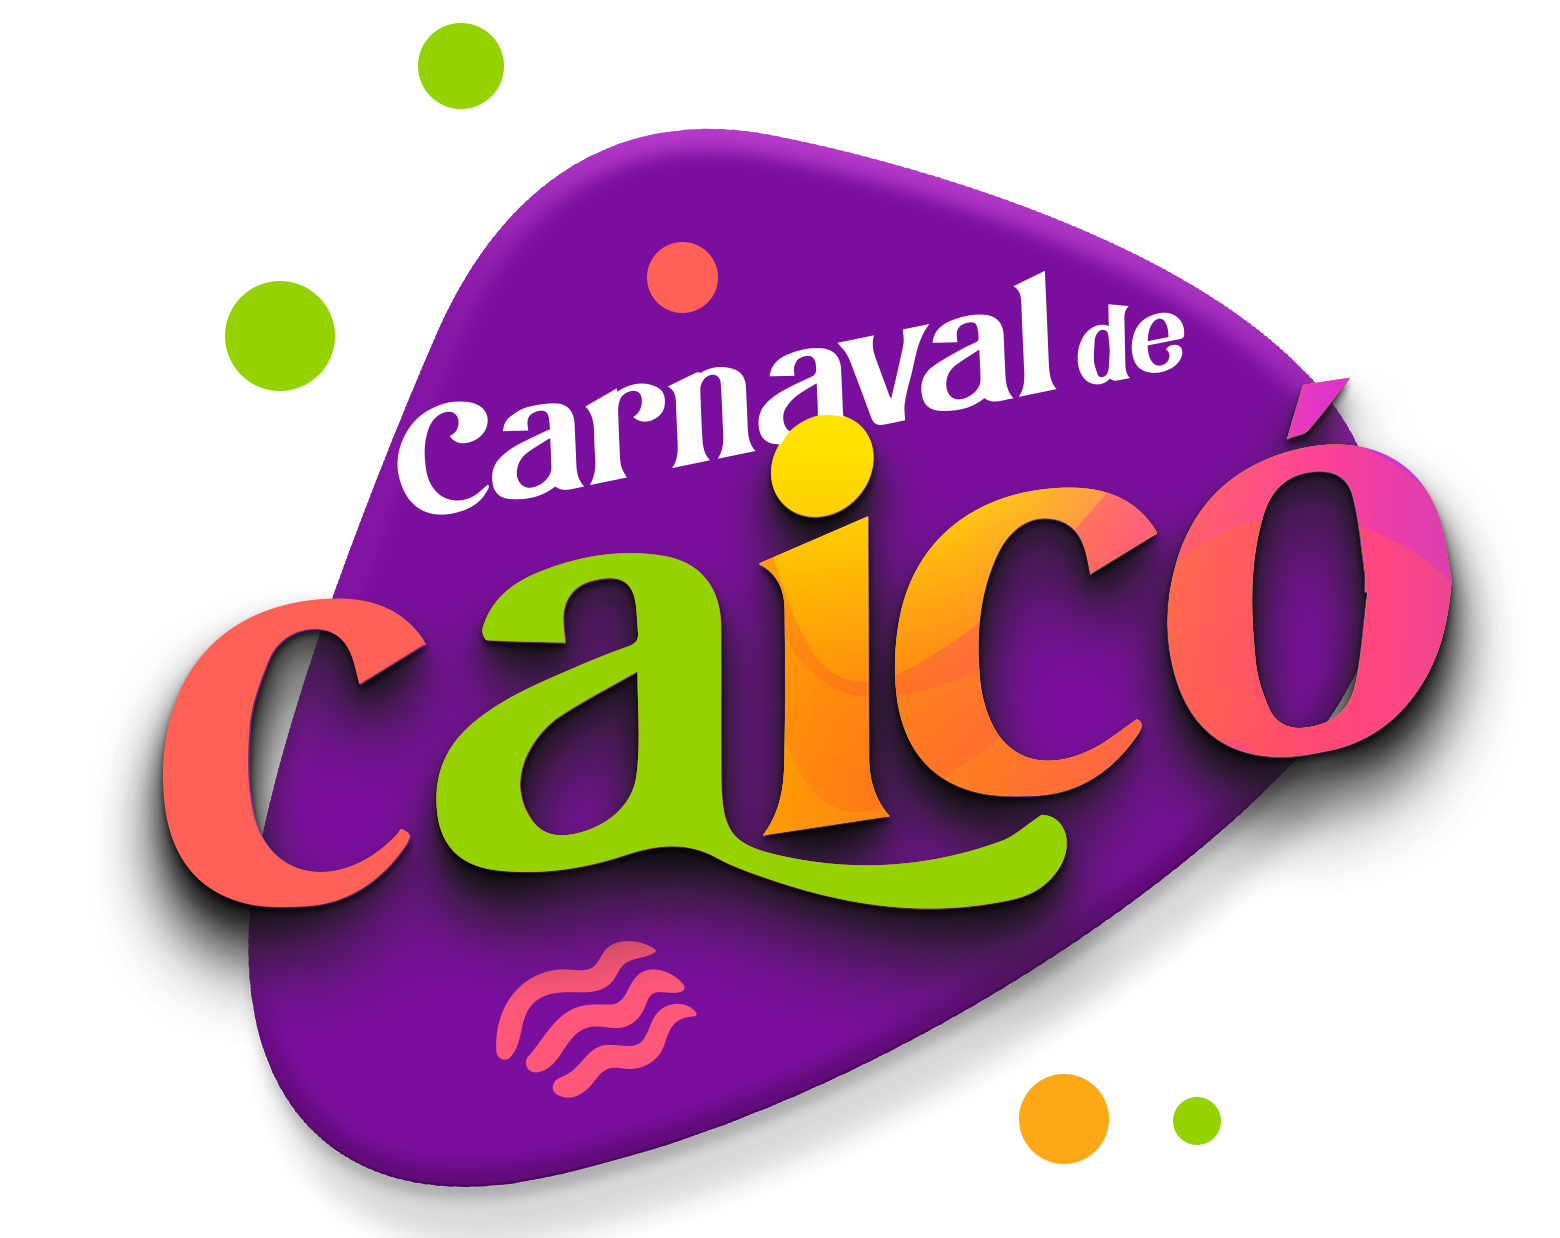 Carnaval de Caicó